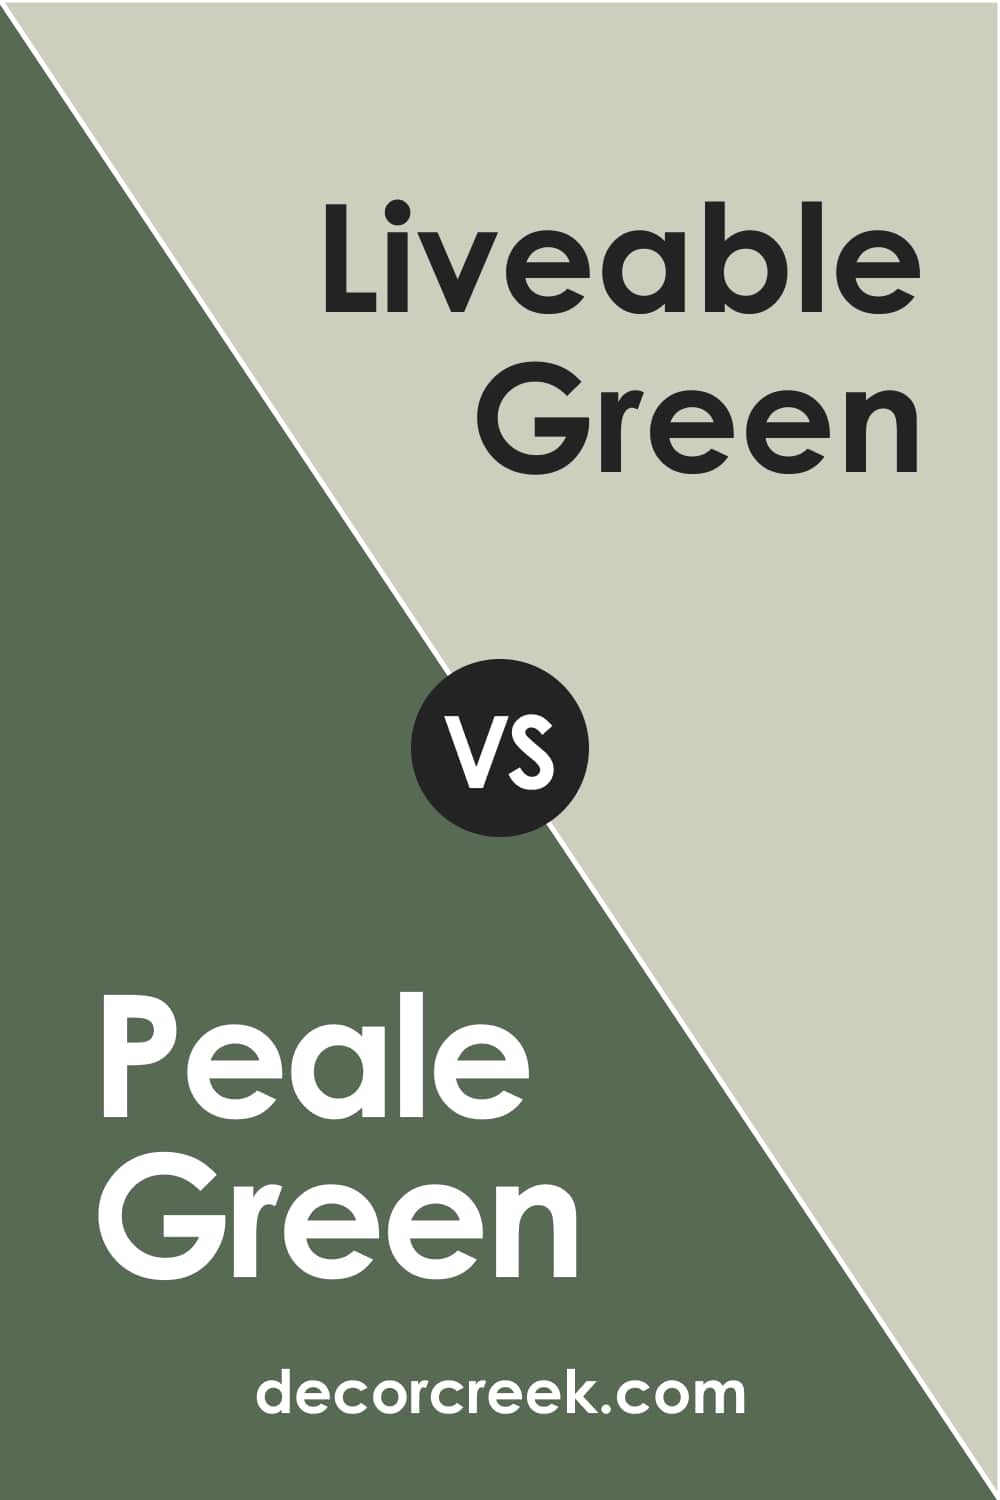 Peale Green vs Liveable Green